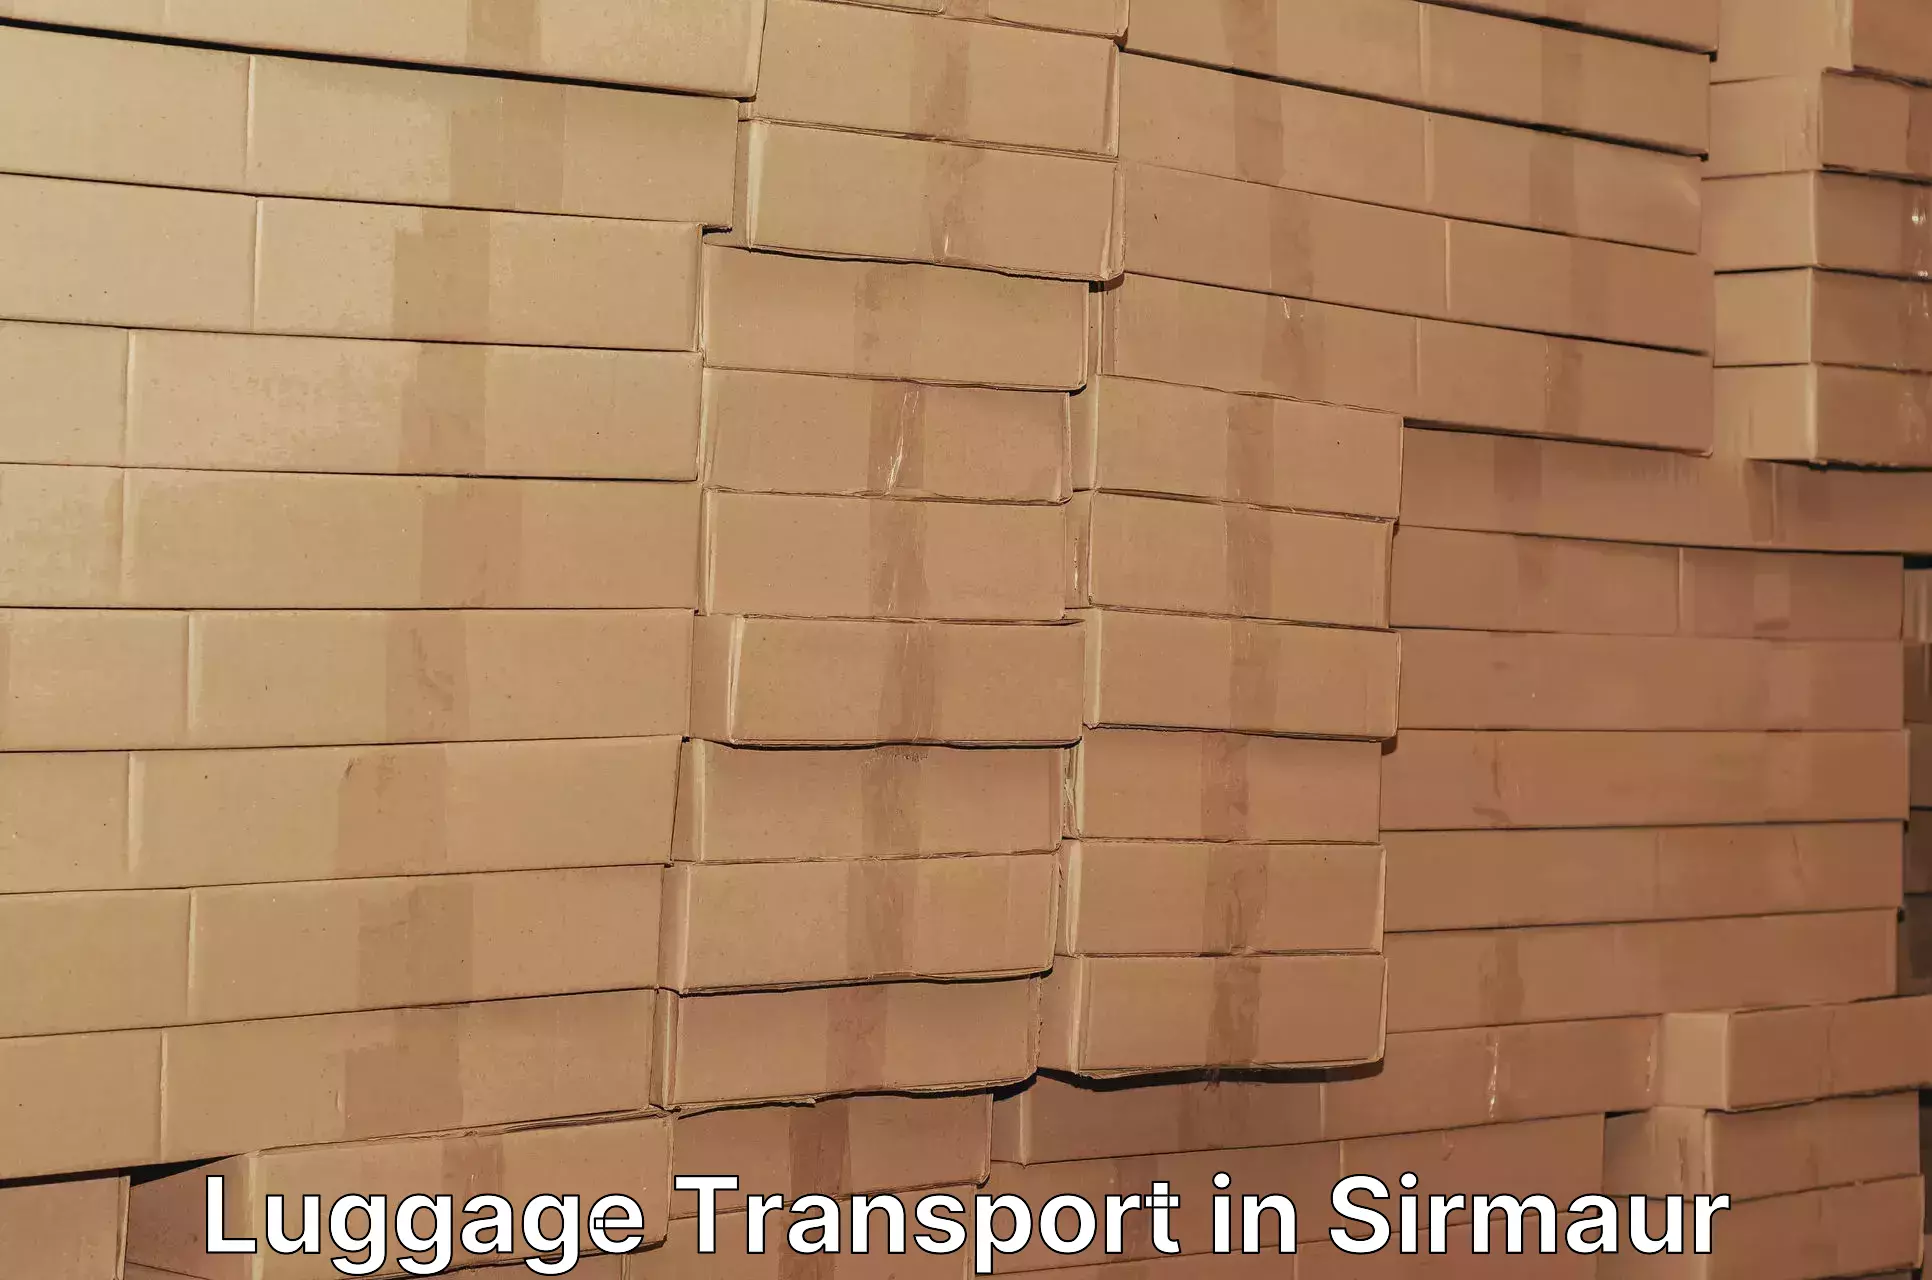 Baggage transport innovation in Sirmaur